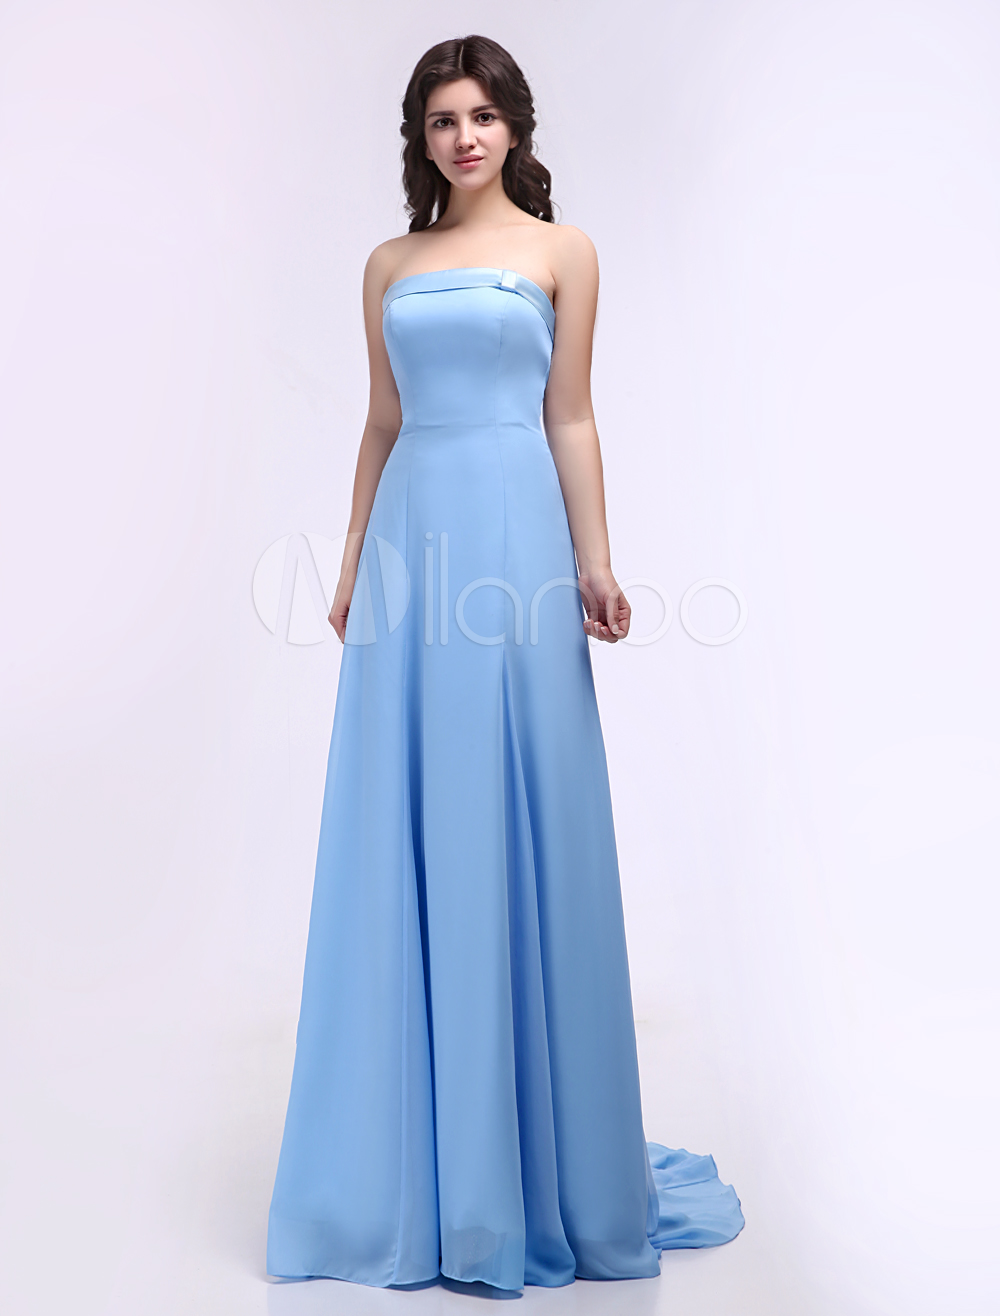 light blue satin bridesmaid dress